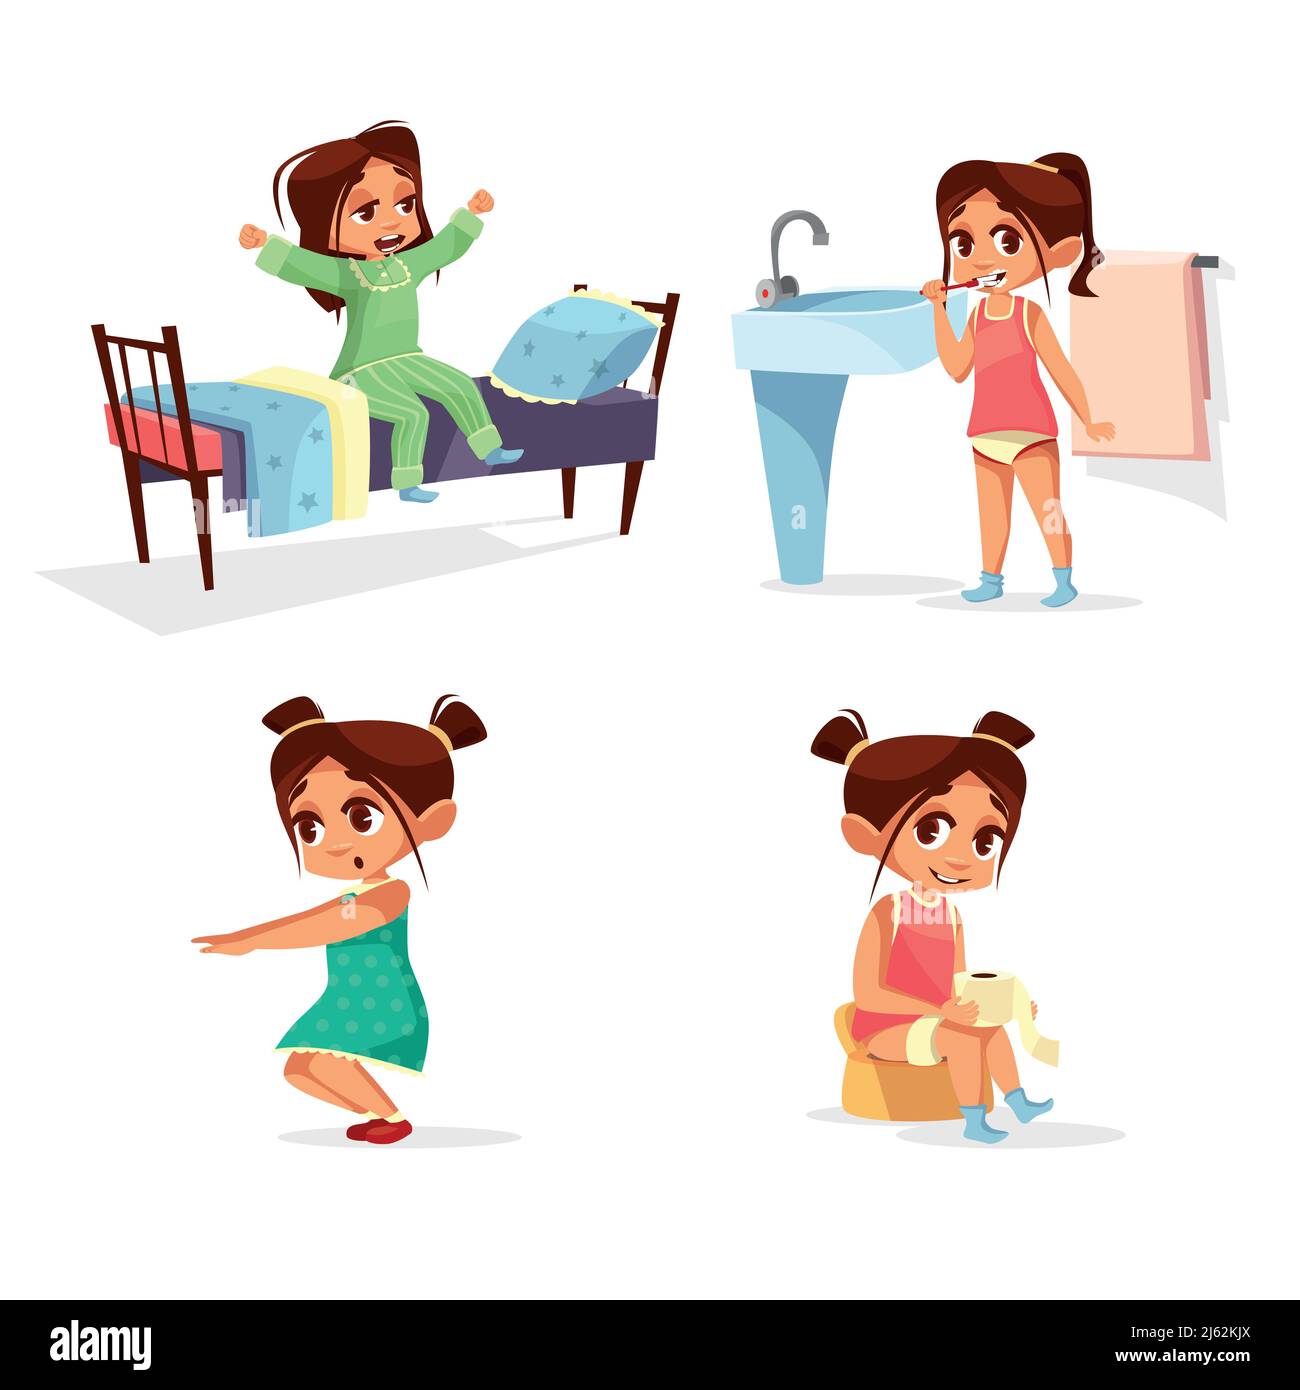 Girl kid morning routine vector cartoon illustration. Flat design of girl child waking up from sleep, washing and brushing teeth in bathroom toilet an Stock Vector